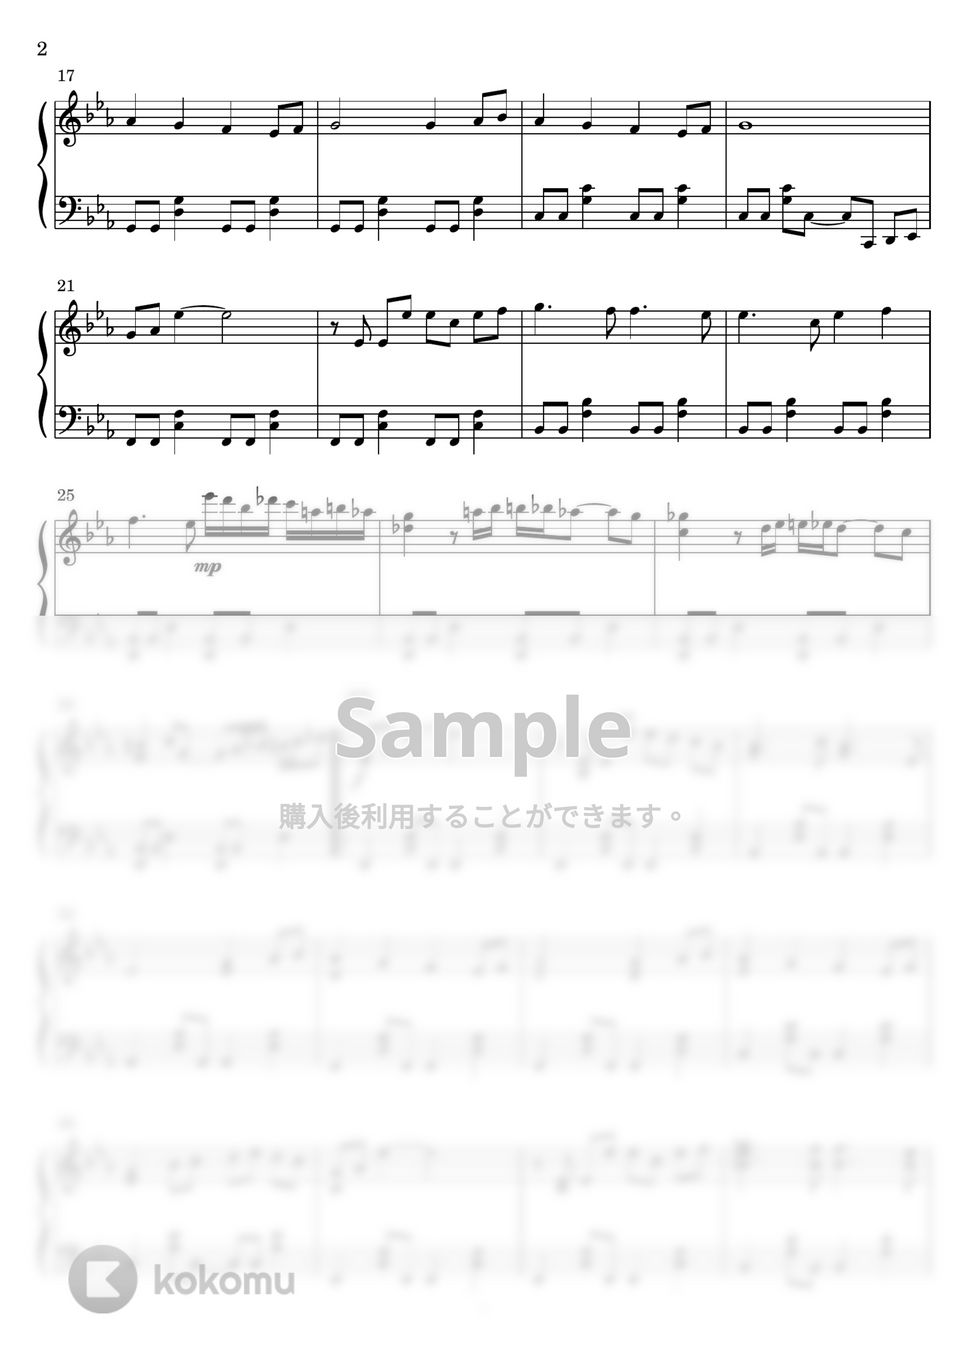 Official髭男dism - ホワイトノイズ(フルver.) (ピアノソロ) by Miz